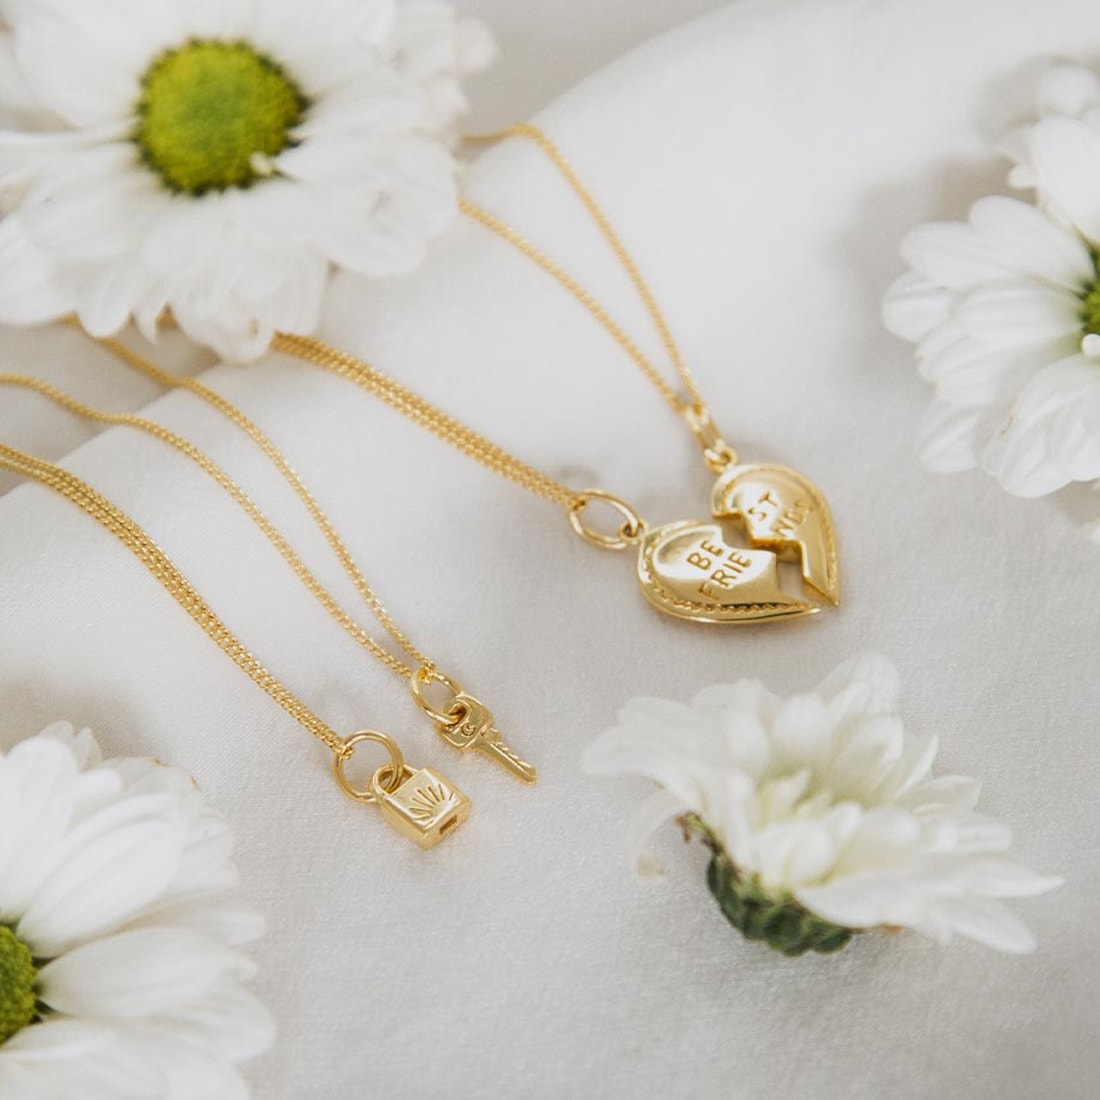 Best Friendship Necklace | Broken Heart BFF Necklace Set - Silver